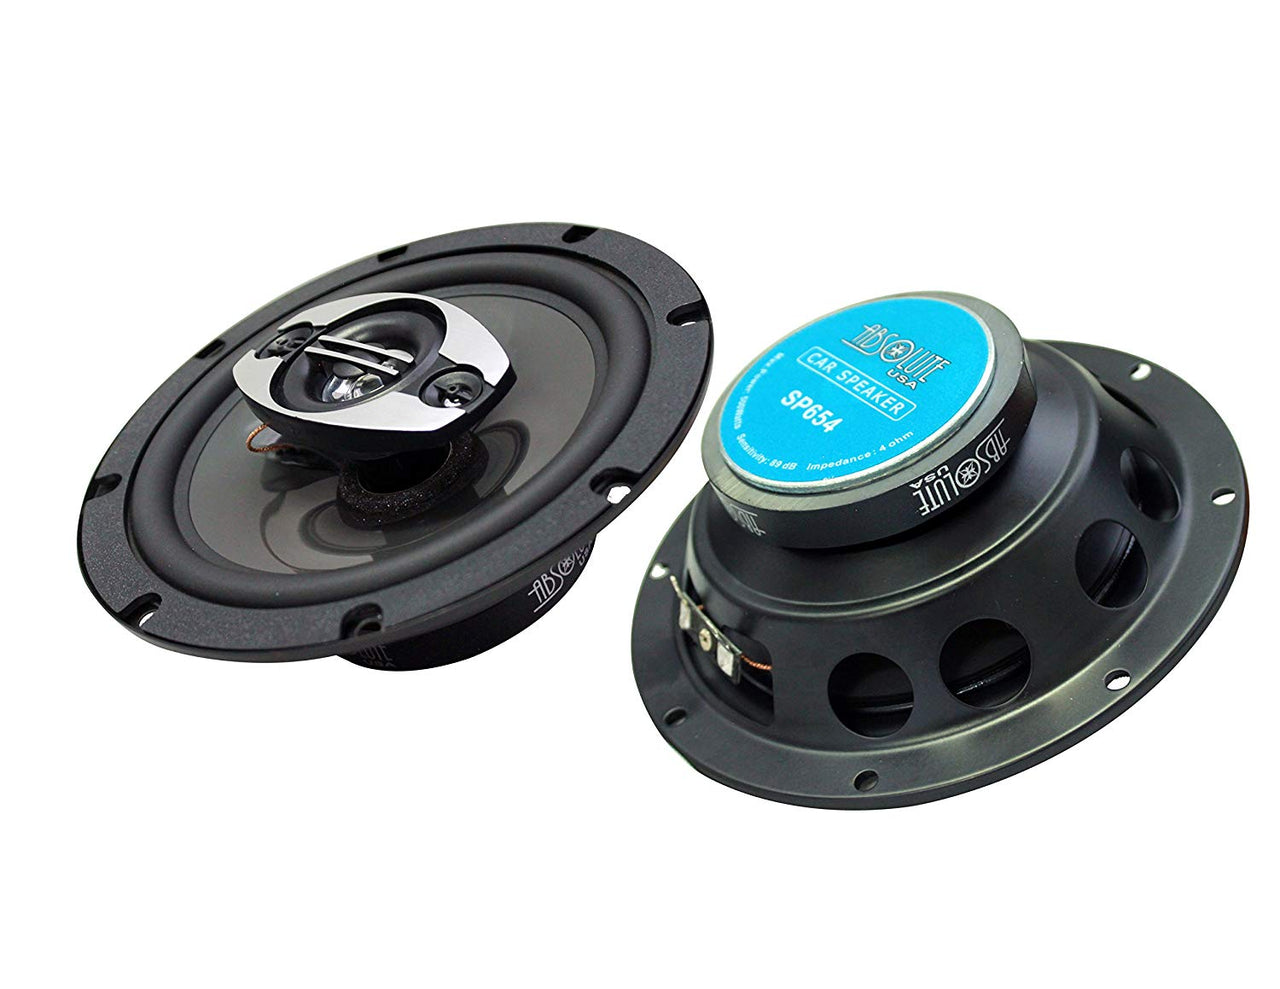 2 Pair Absolute USA SP654 SP Series 6.5" 4 Way full-range loudspeakers<br/> 6.5" 4 Way full-range loudspeakers Car Speakers 500 Watts Max Power